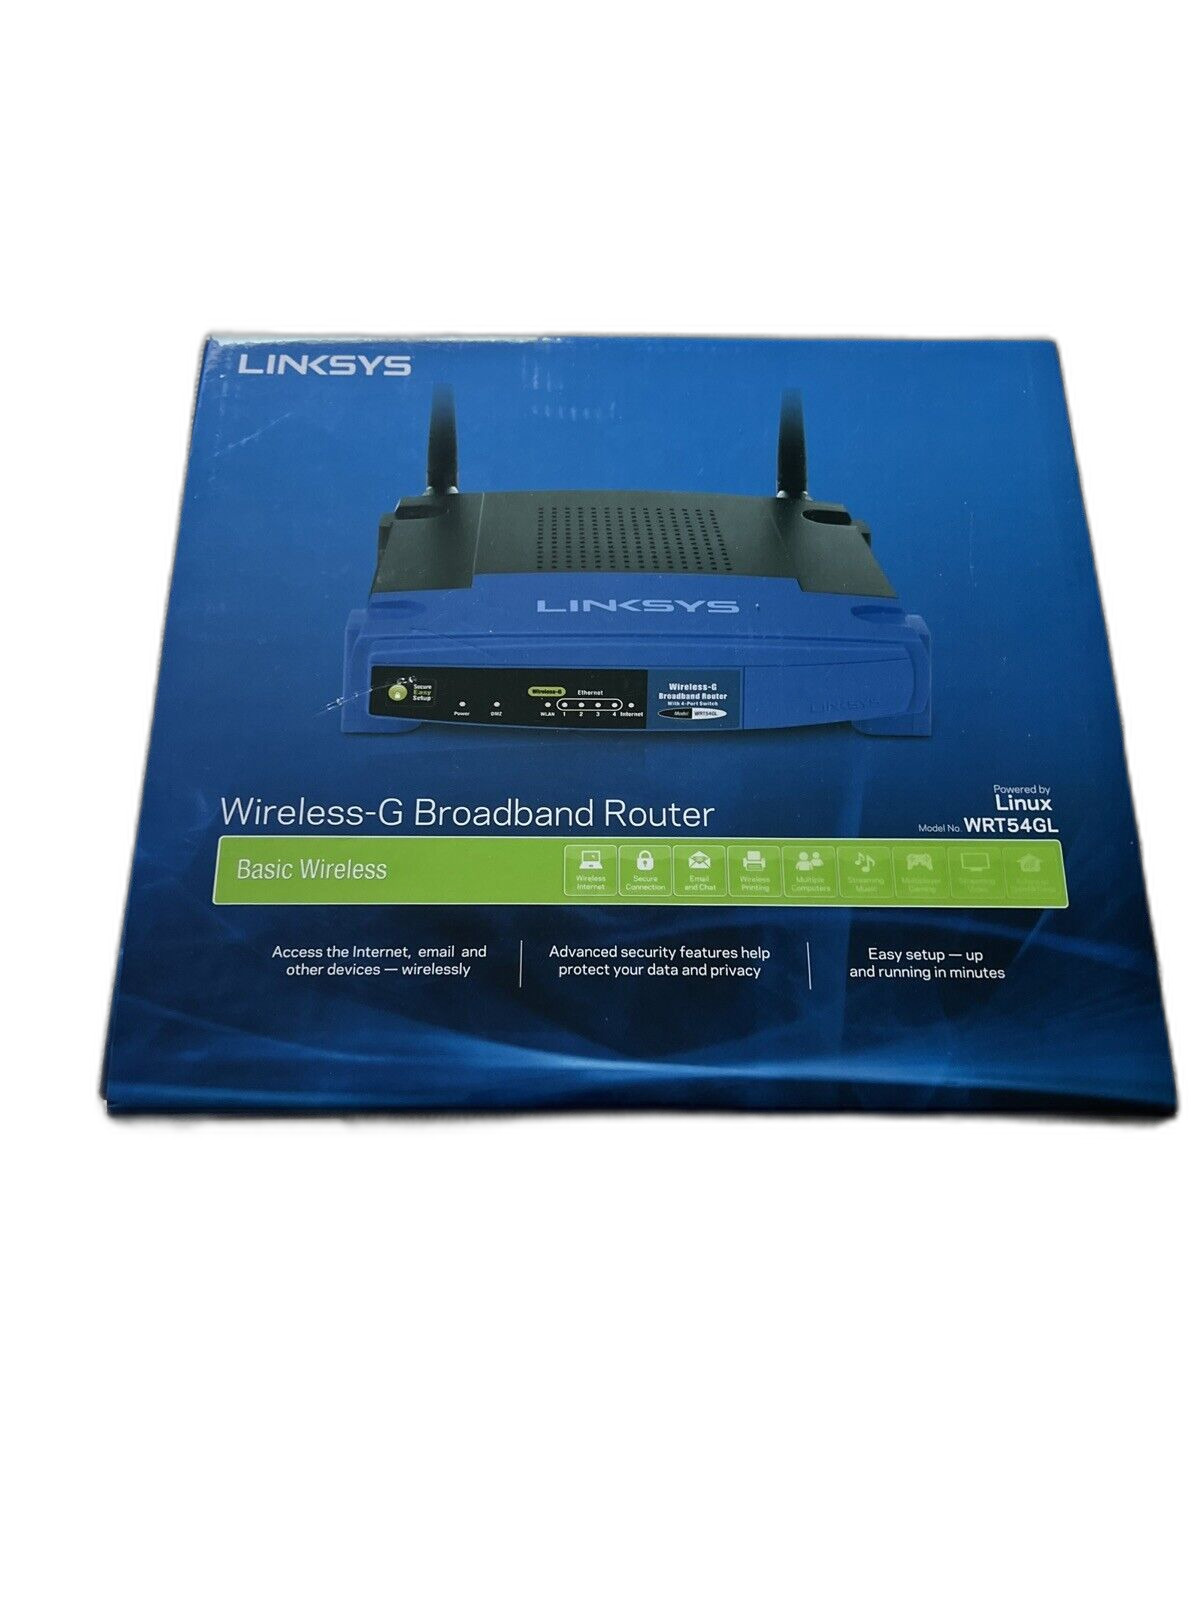 LINKSYS by Cisco WRT54G2 54 Mbps 2.4 GHz Wireless-G Broadband Router - Brand New